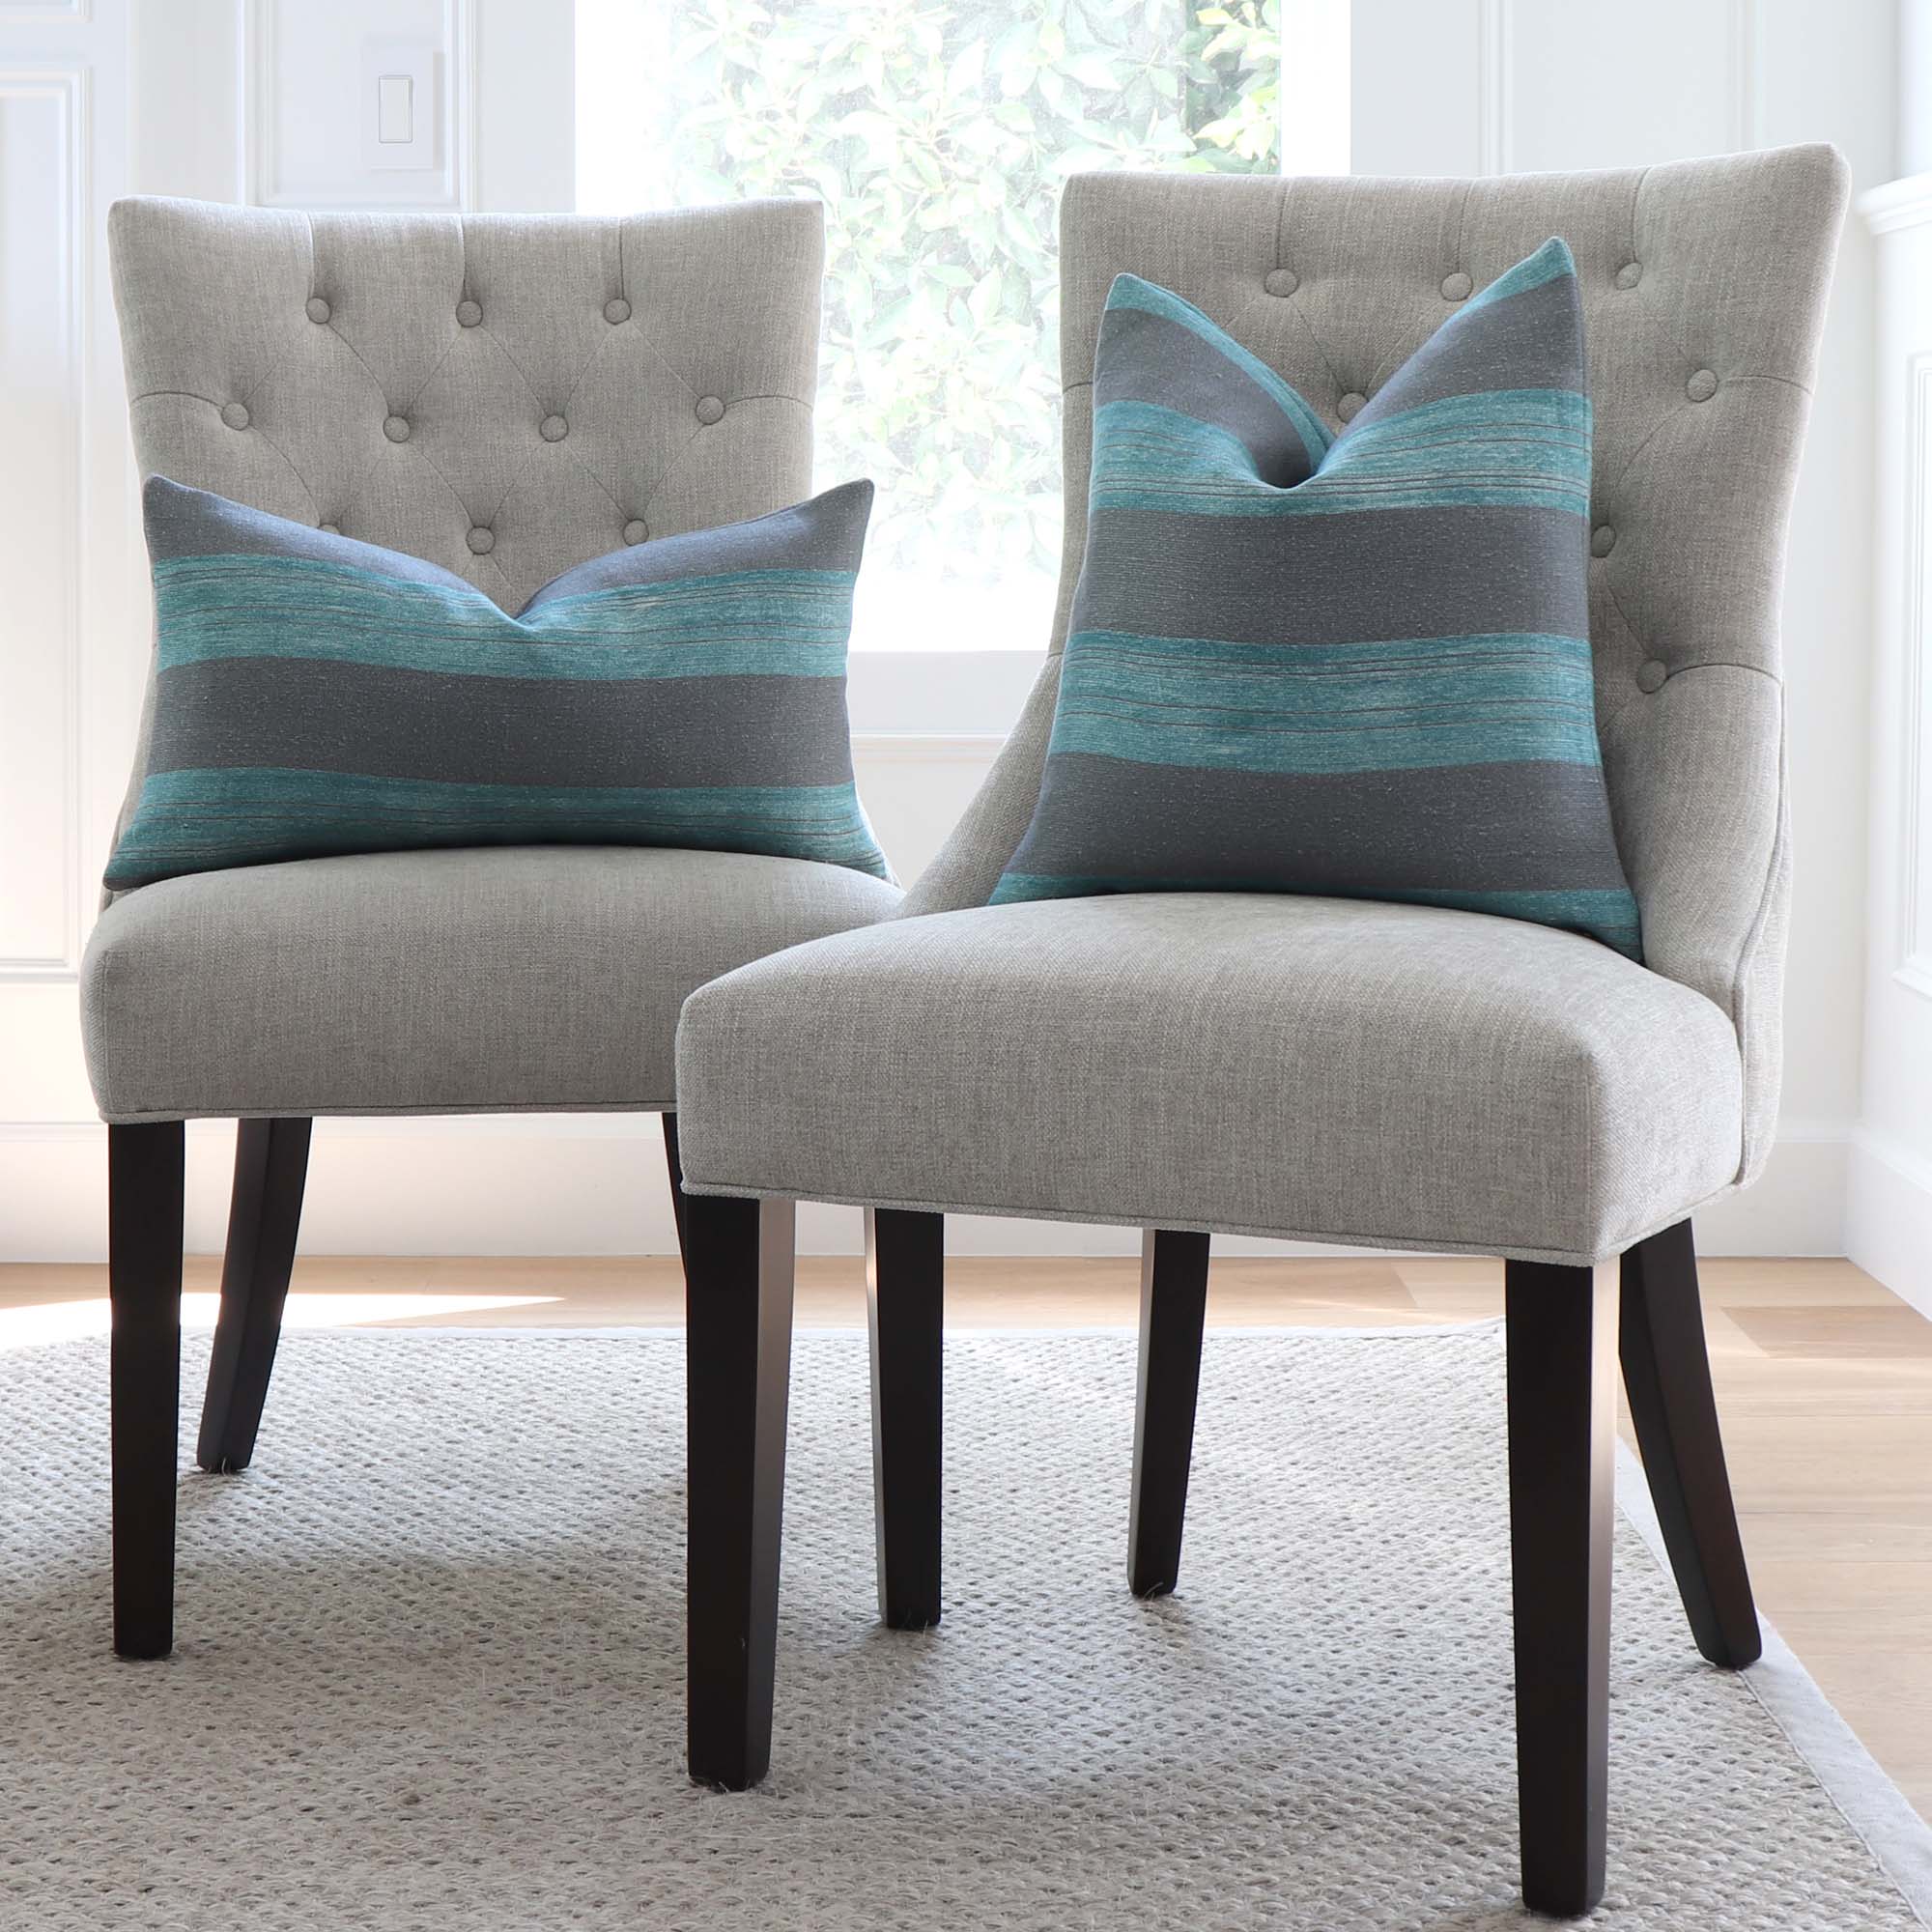 Kelly Wearstler Askew Slate Jade Stripes Linen Designer Luxury Throw Pillow Cover on Chairs in Home Decor